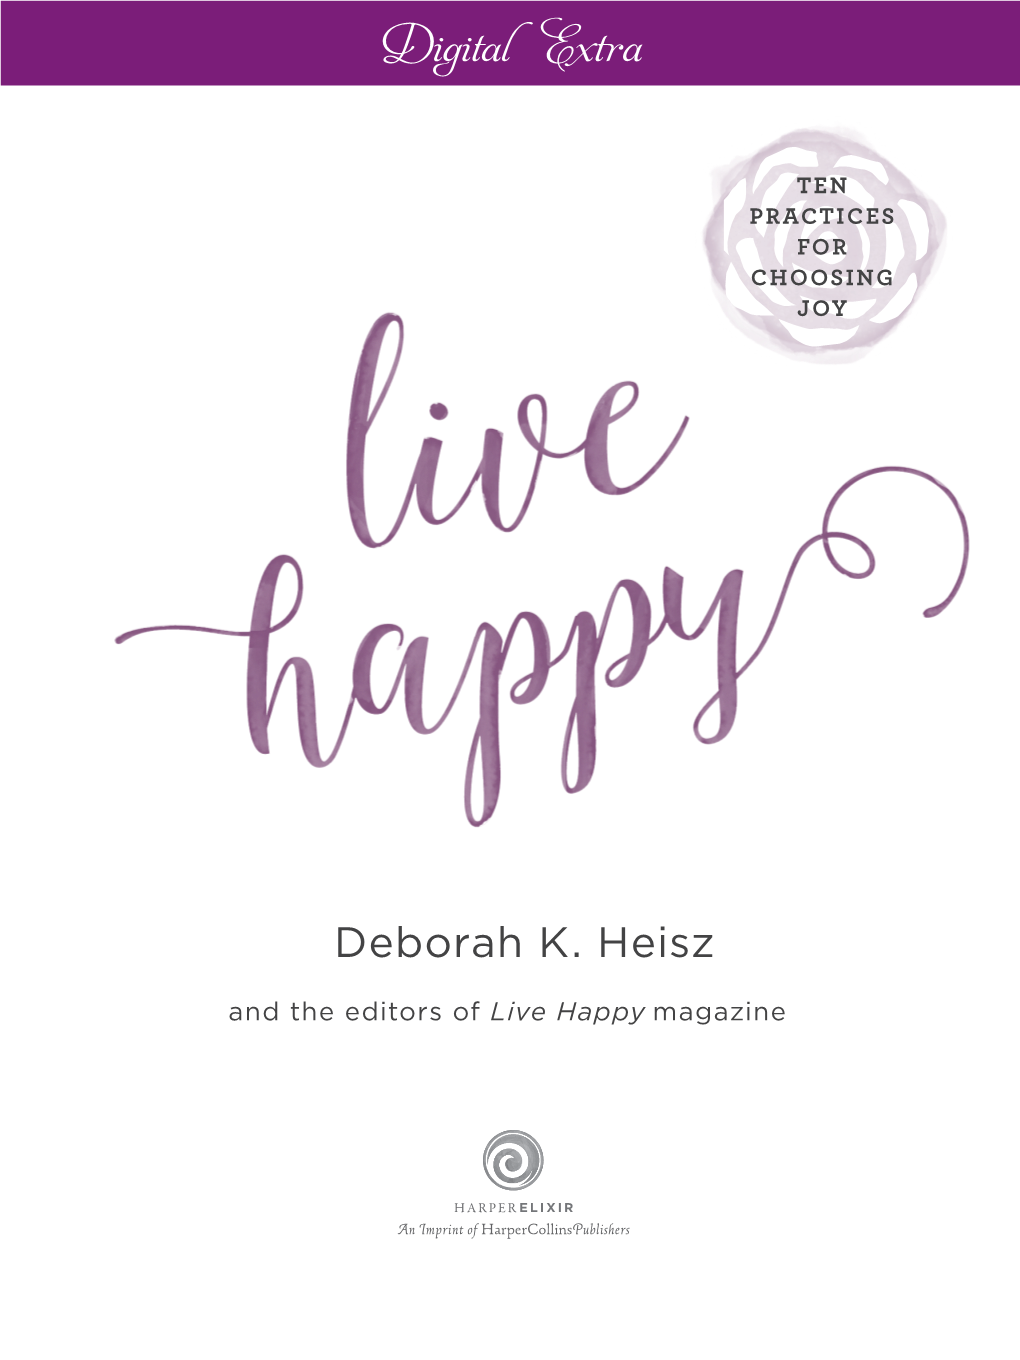 Deborah K. Heisz and the Editors of Live Happy Magazine Jeff Olson: the Chain of Life